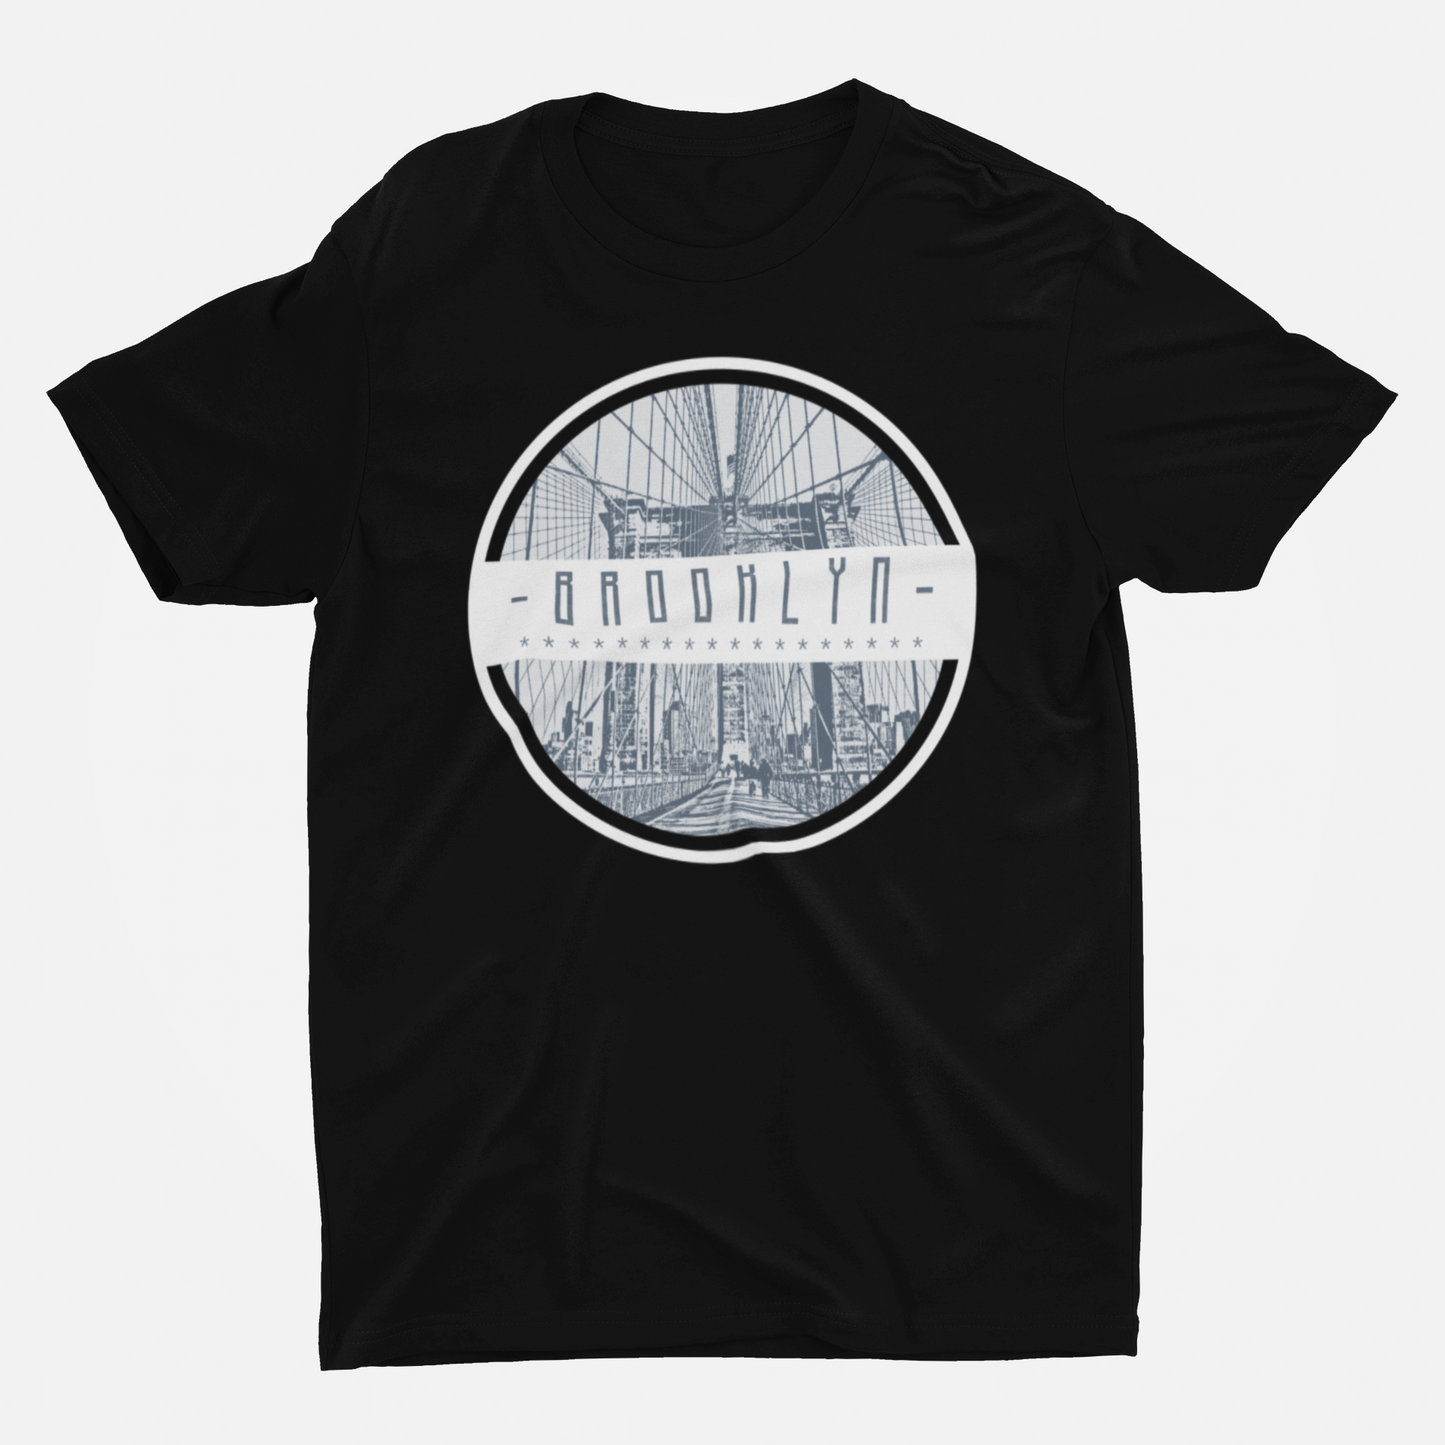 Brooklyn Black Round Neck T-Shirt for Men. 